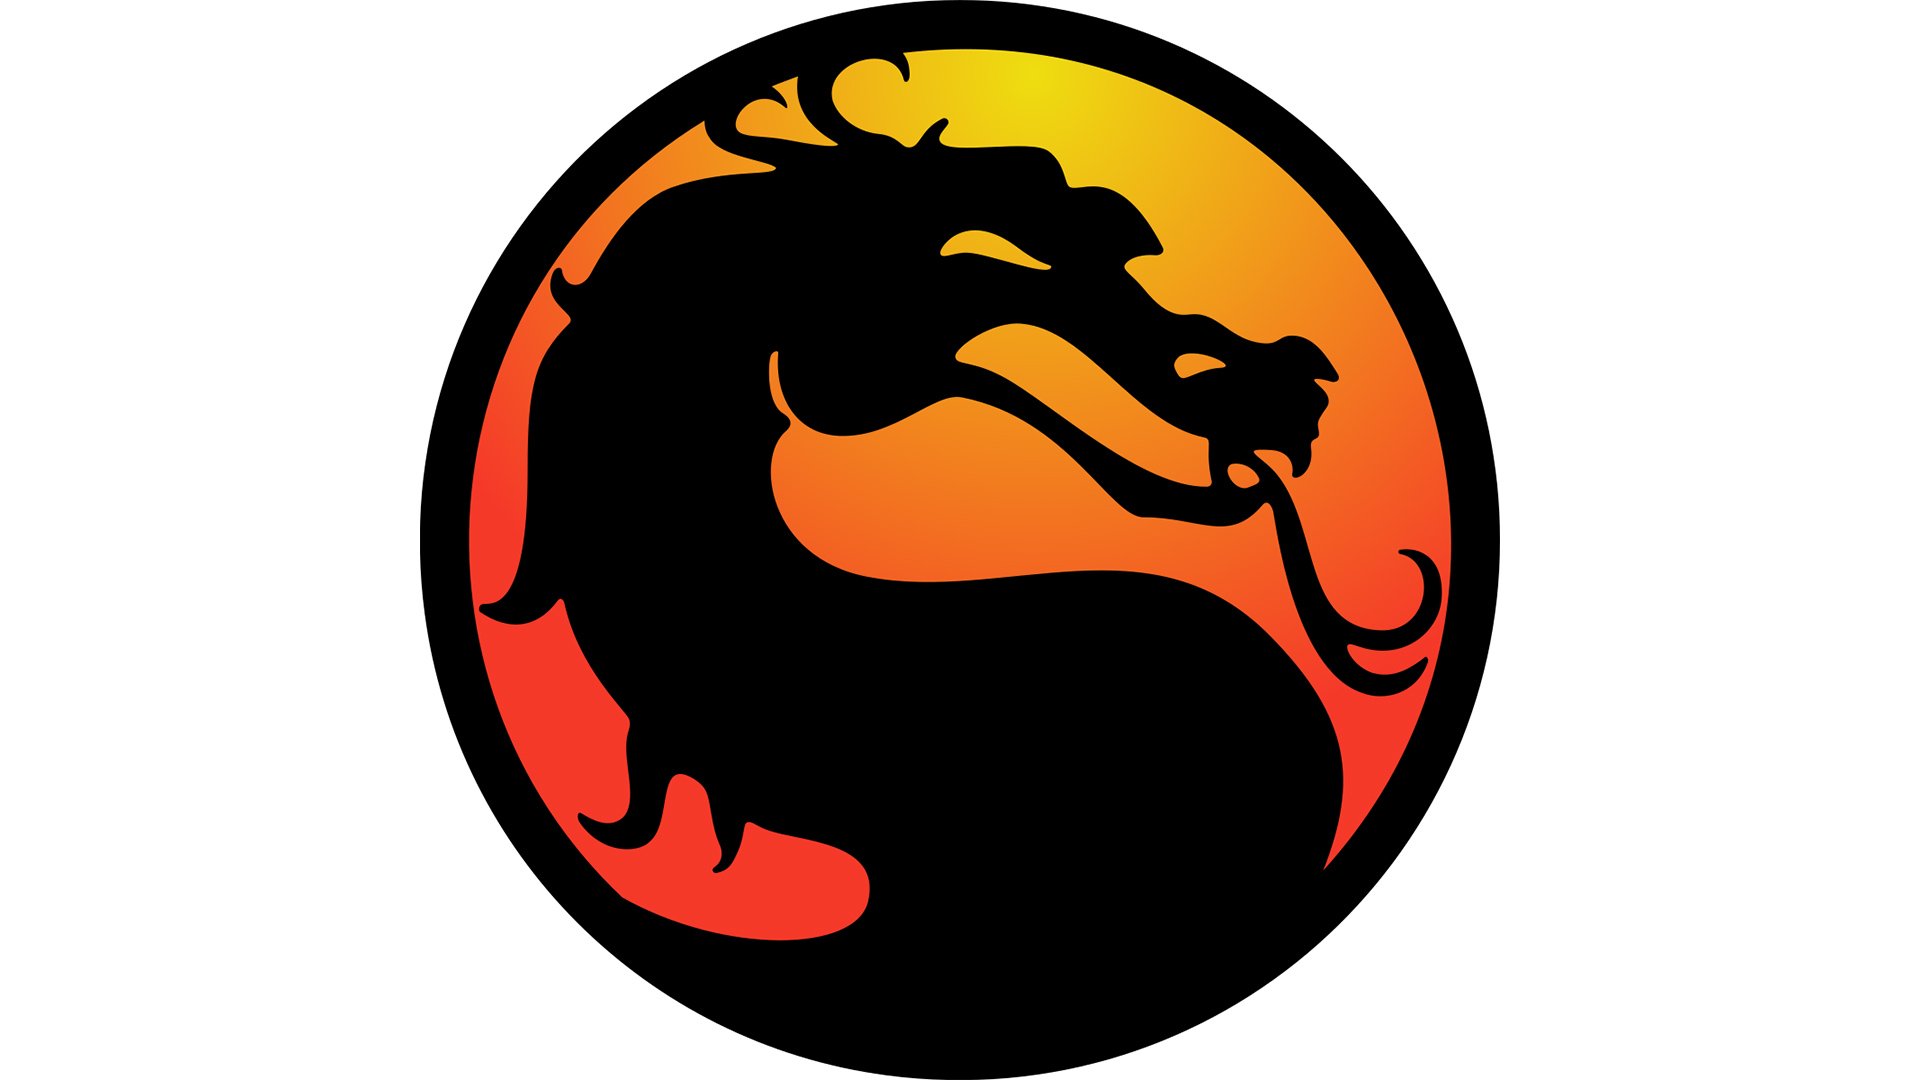 Mortal Kombat celebrates 30th Anniversary with new trailer